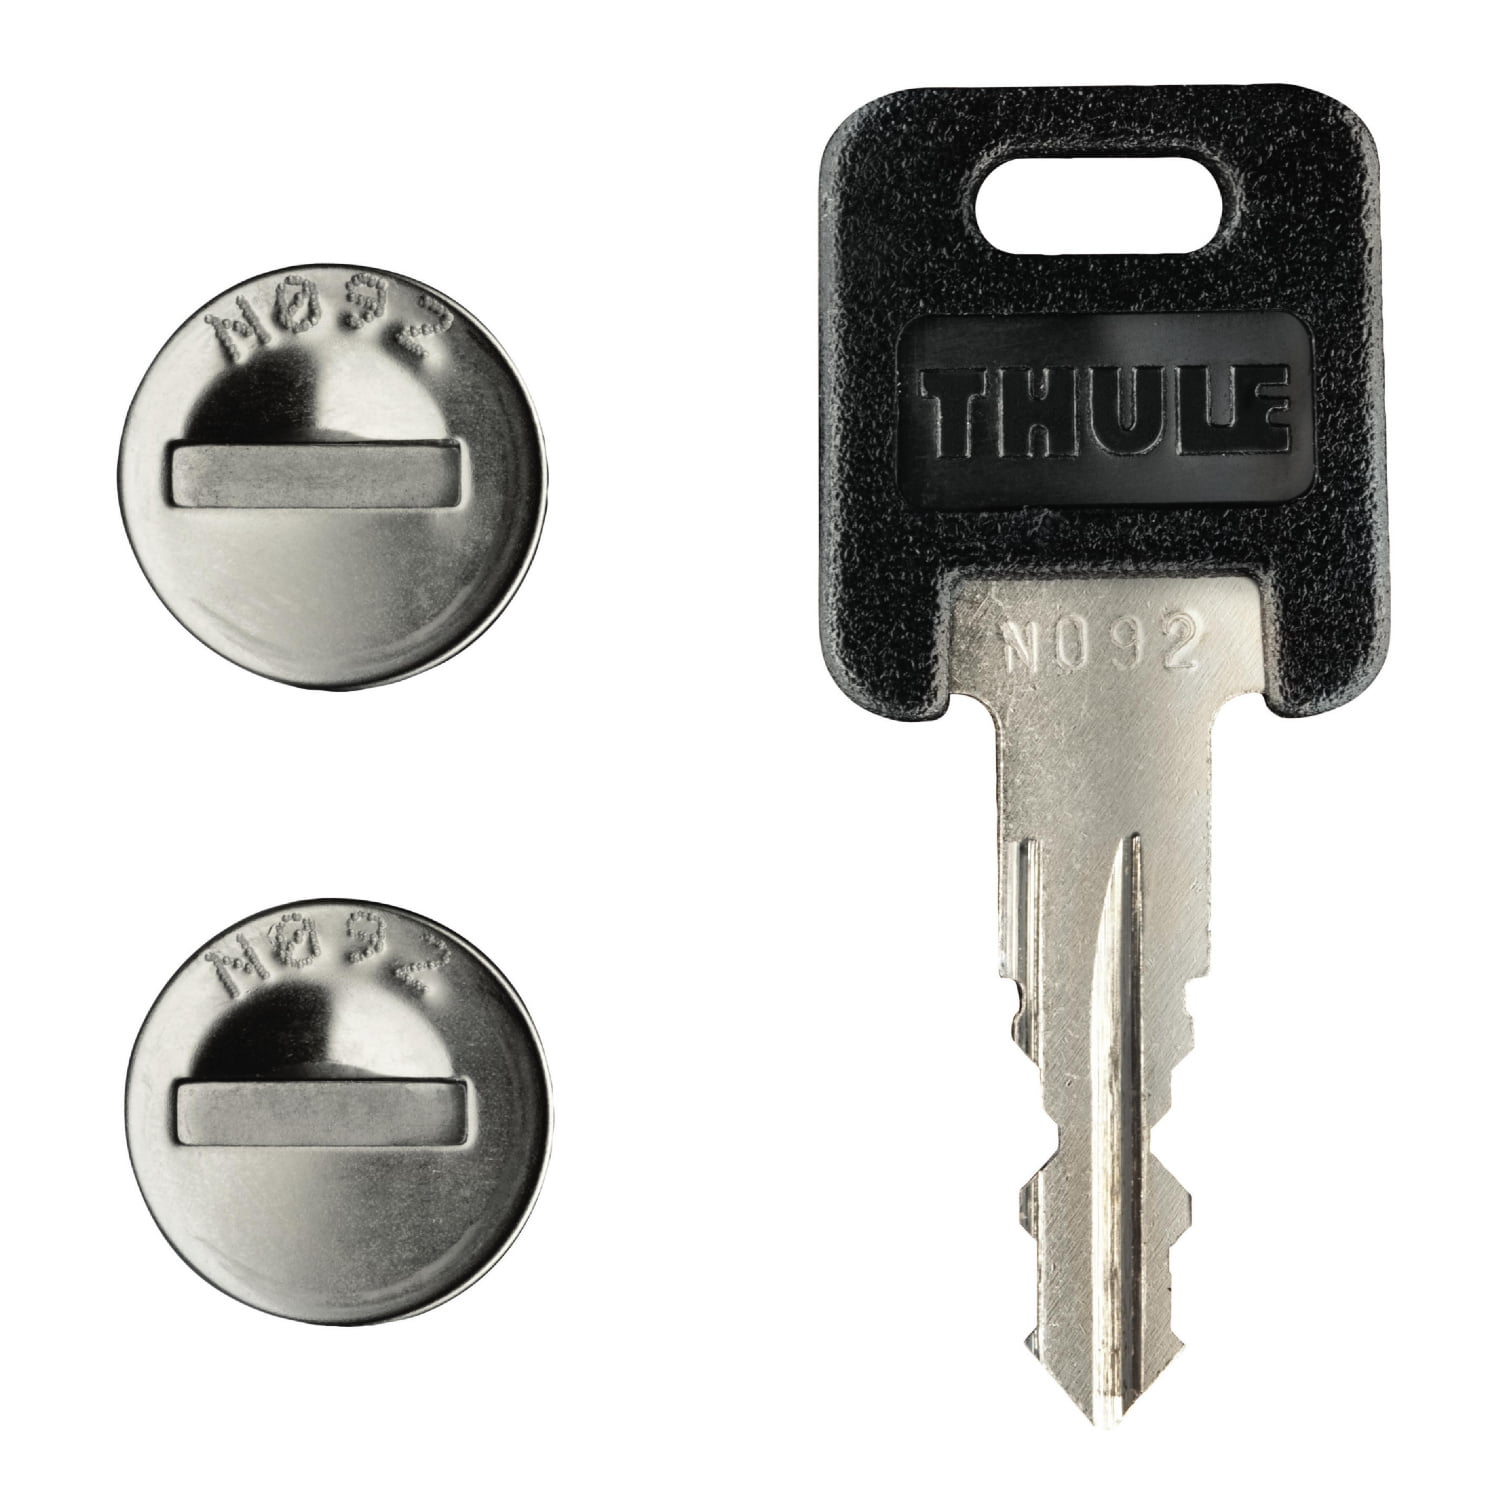 Thule 544 Lock Cylinder Aero Replacement For Thule Rack System Keyed Lock Keyed Alike Set Of 4 Locks And 2 Keys Walmart Canada